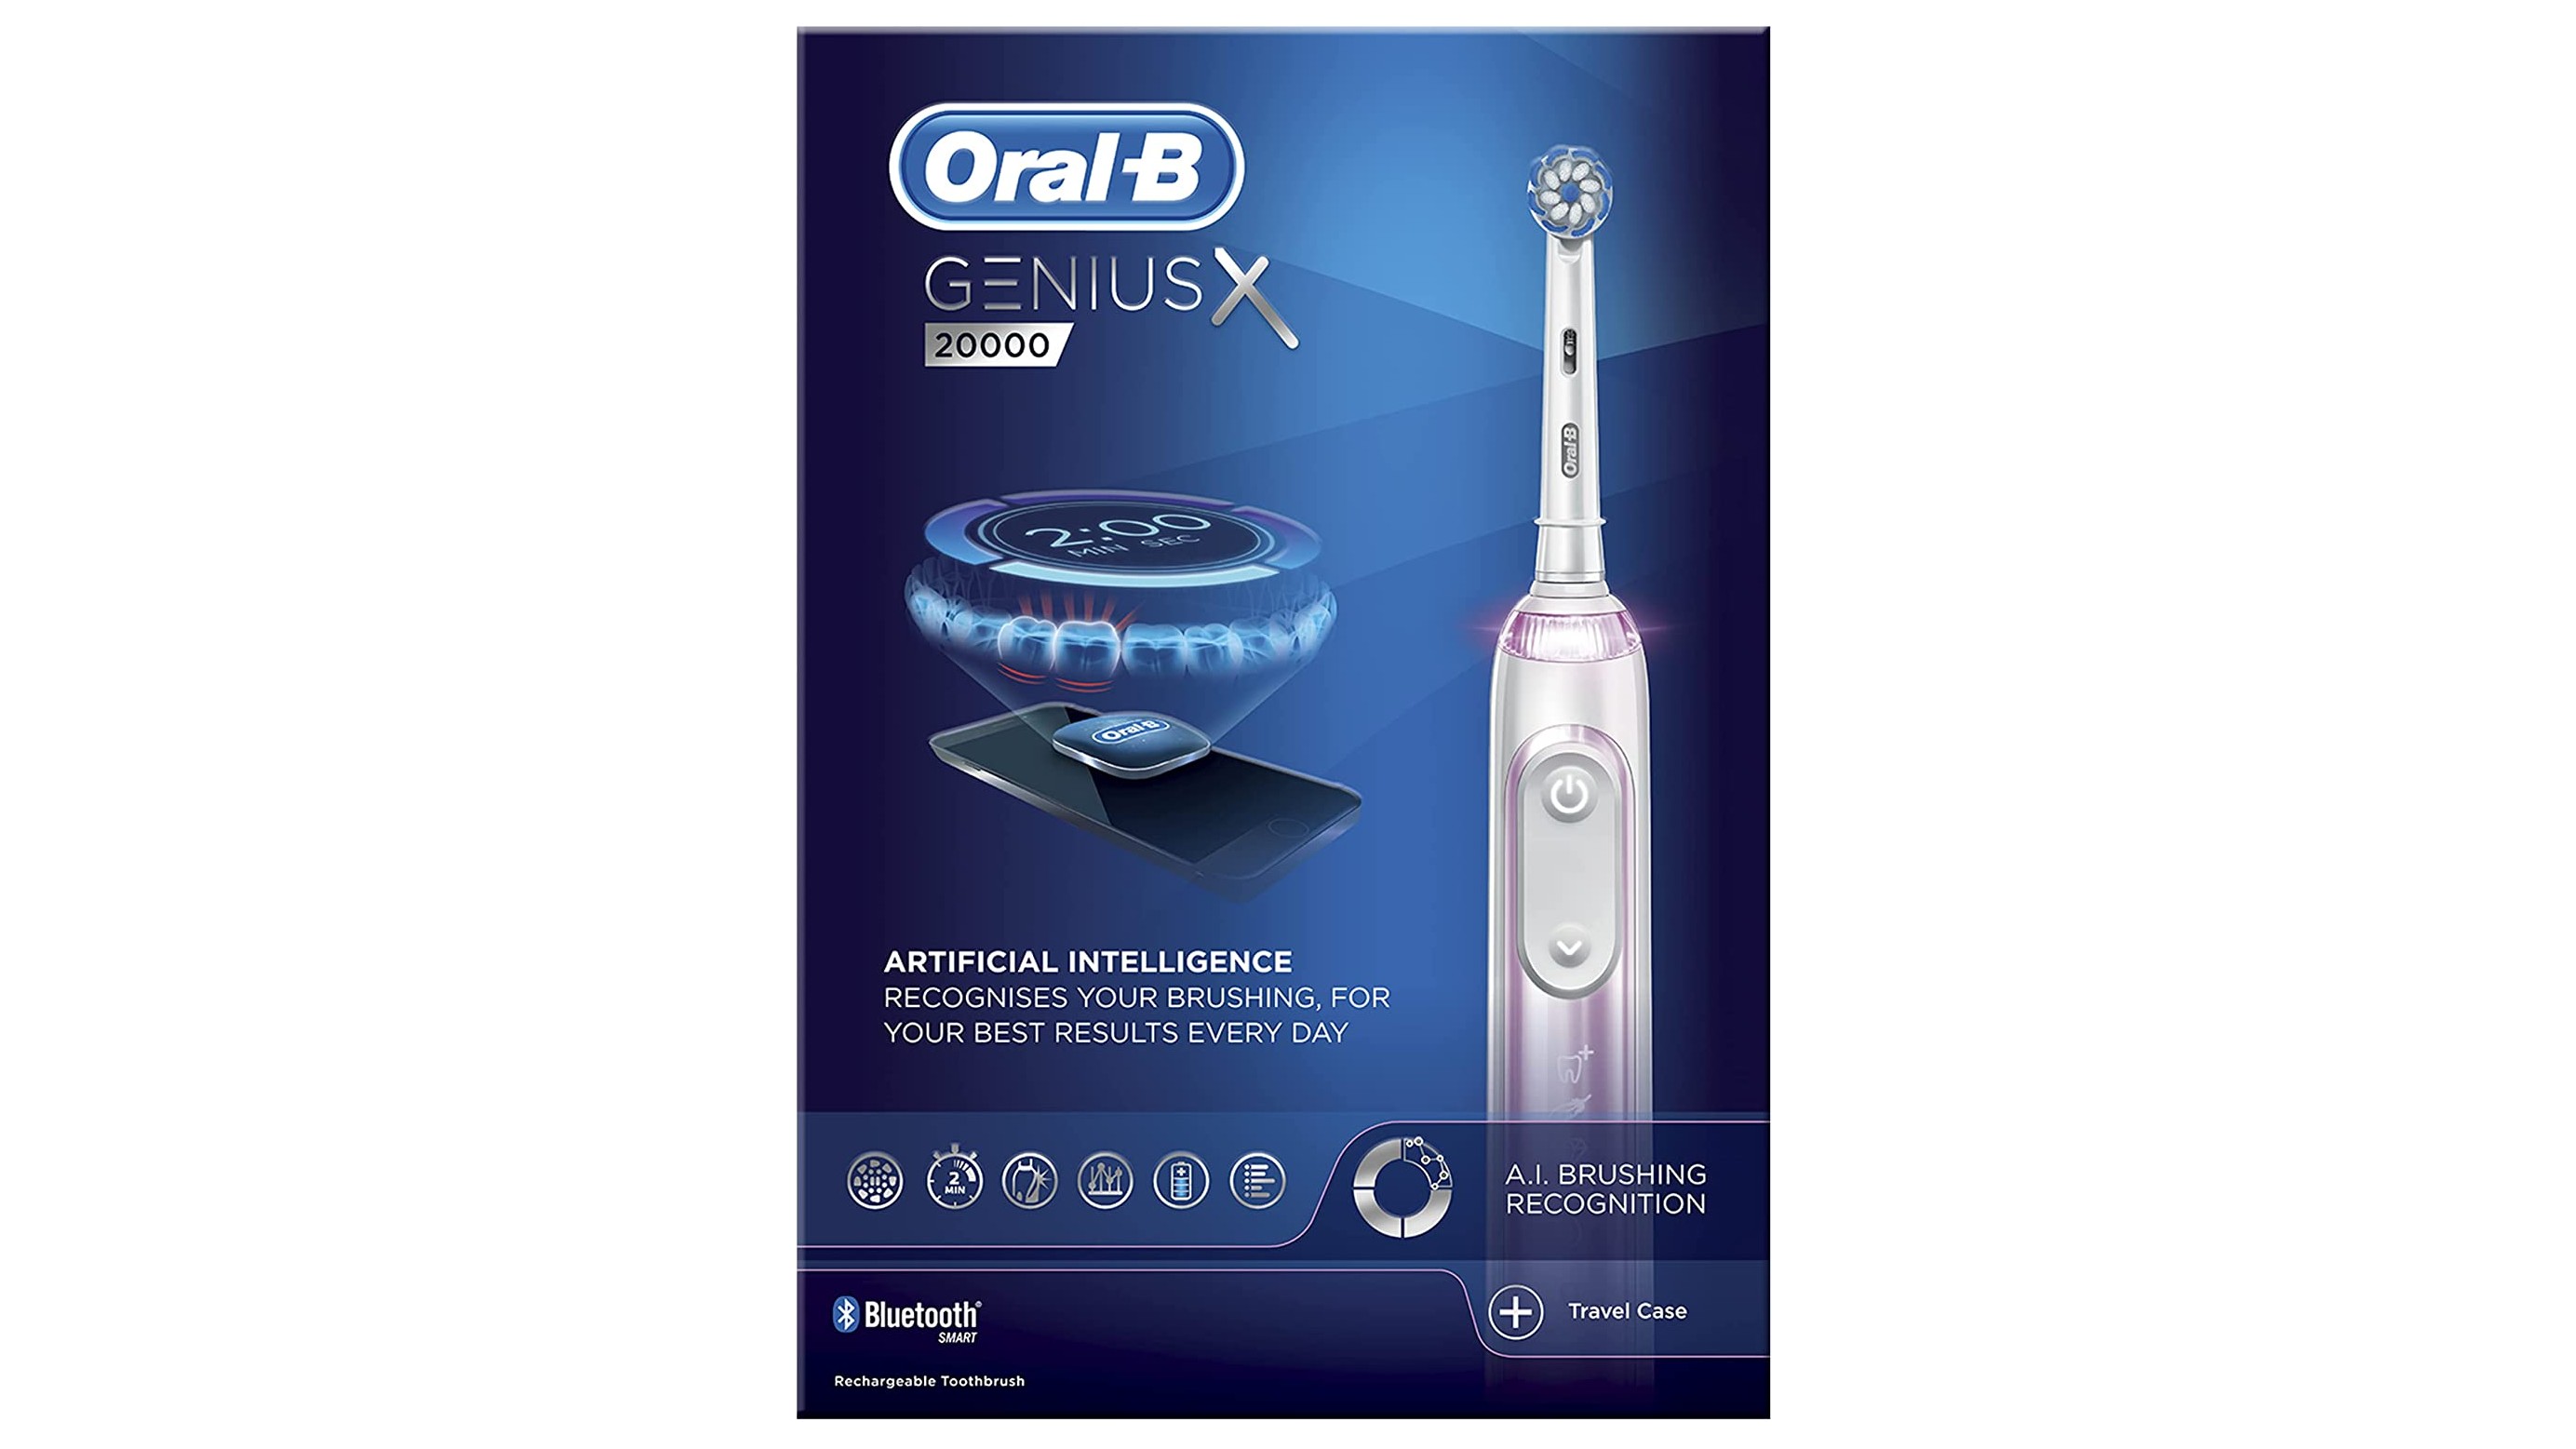 Pack shot of Oral B Genius X